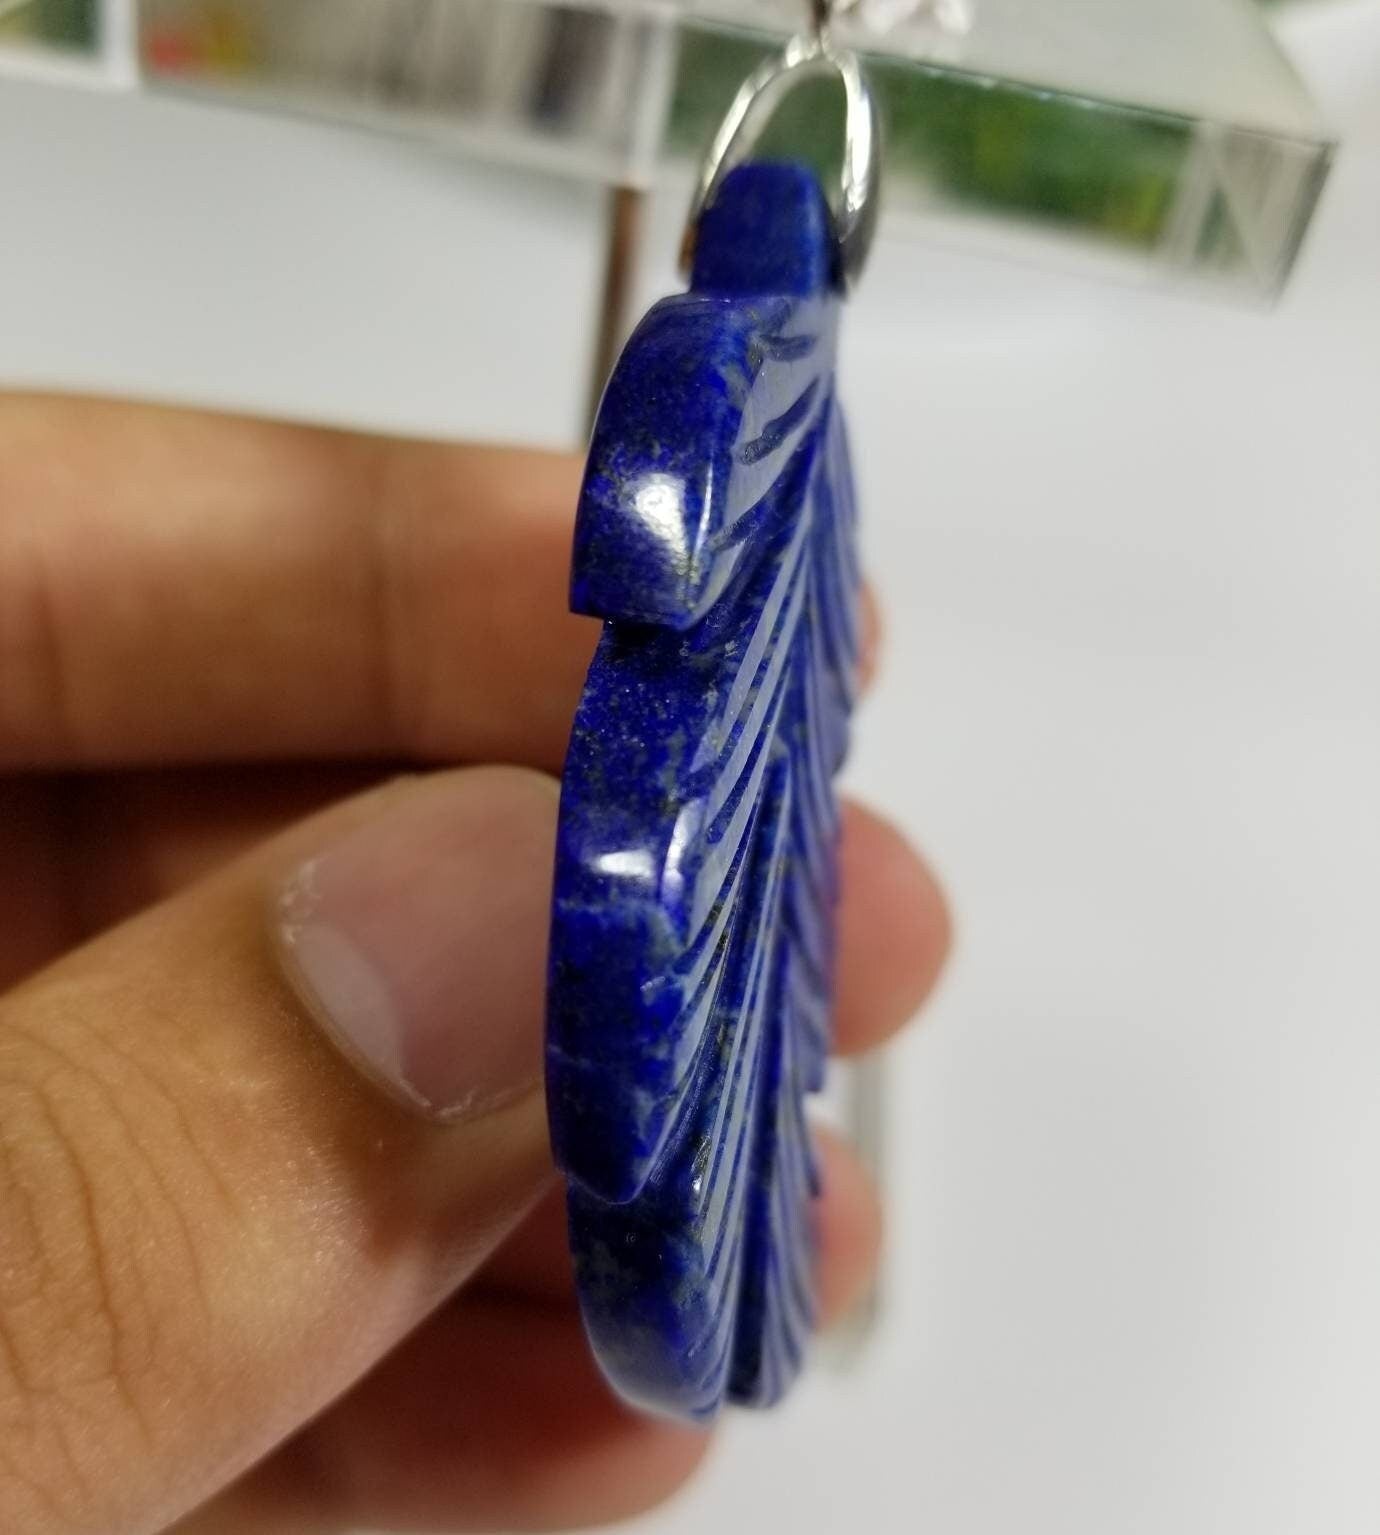 ARSAA GEMS AND MINERALSNatural good quality locket lapis lazuli leaf pendant - Premium  from ARSAA GEMS AND MINERALS - Just $8.00! Shop now at ARSAA GEMS AND MINERALS